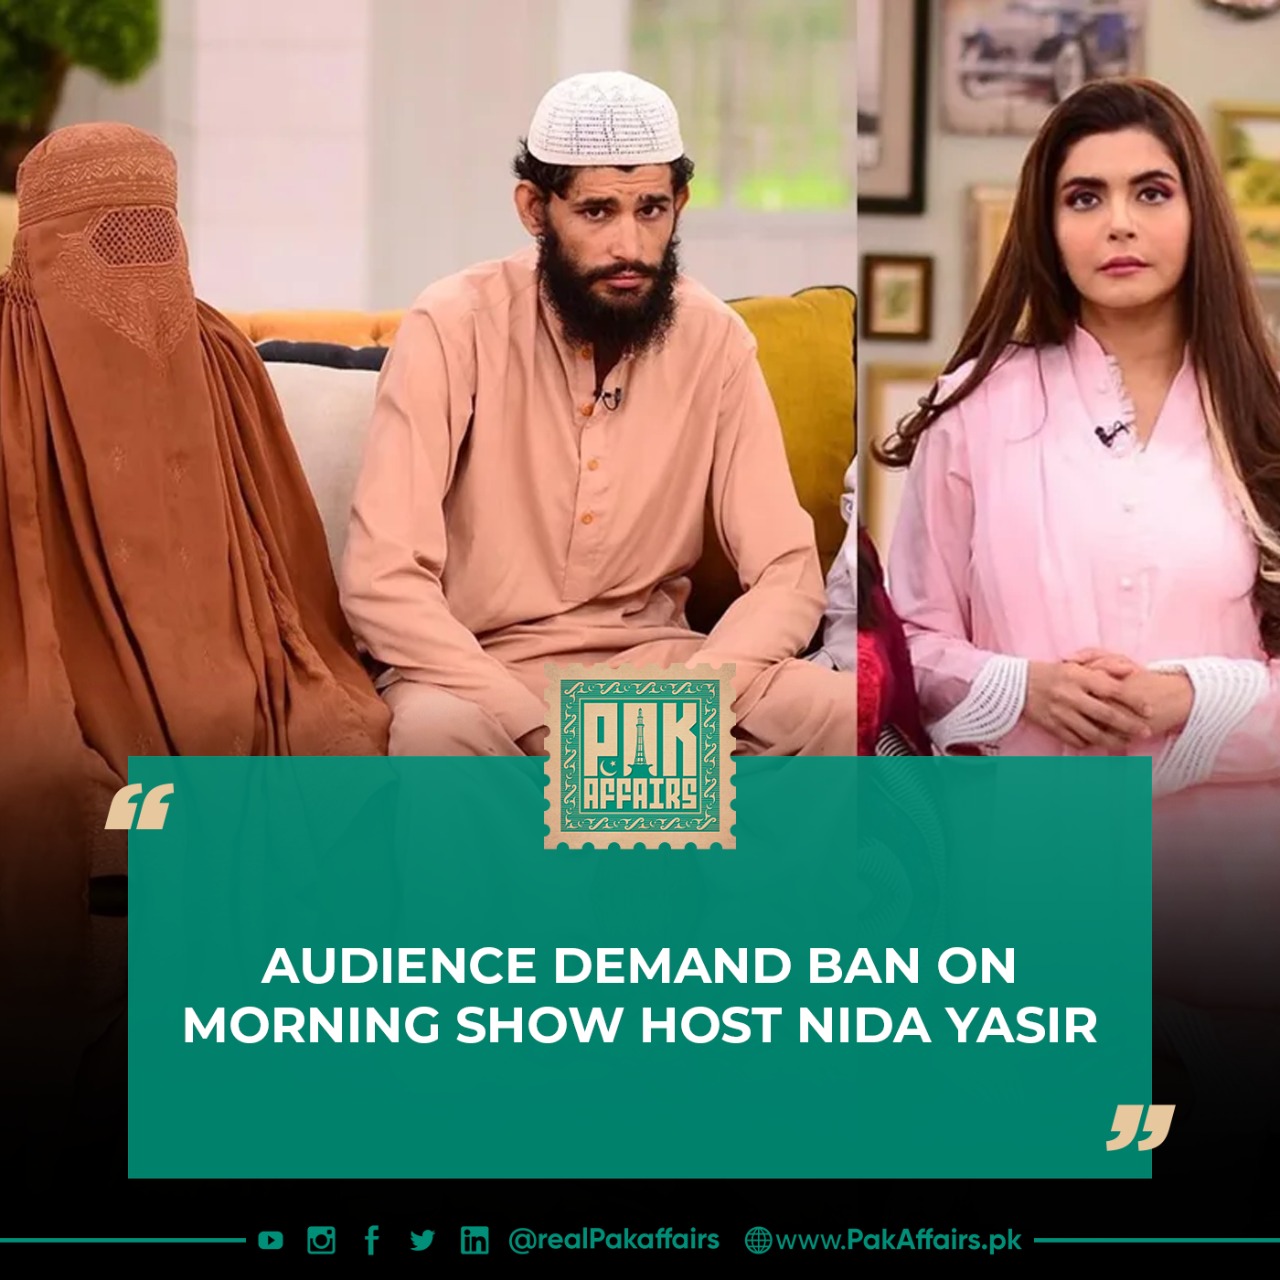 Audience demand ban on morning show host Nida Yasir.